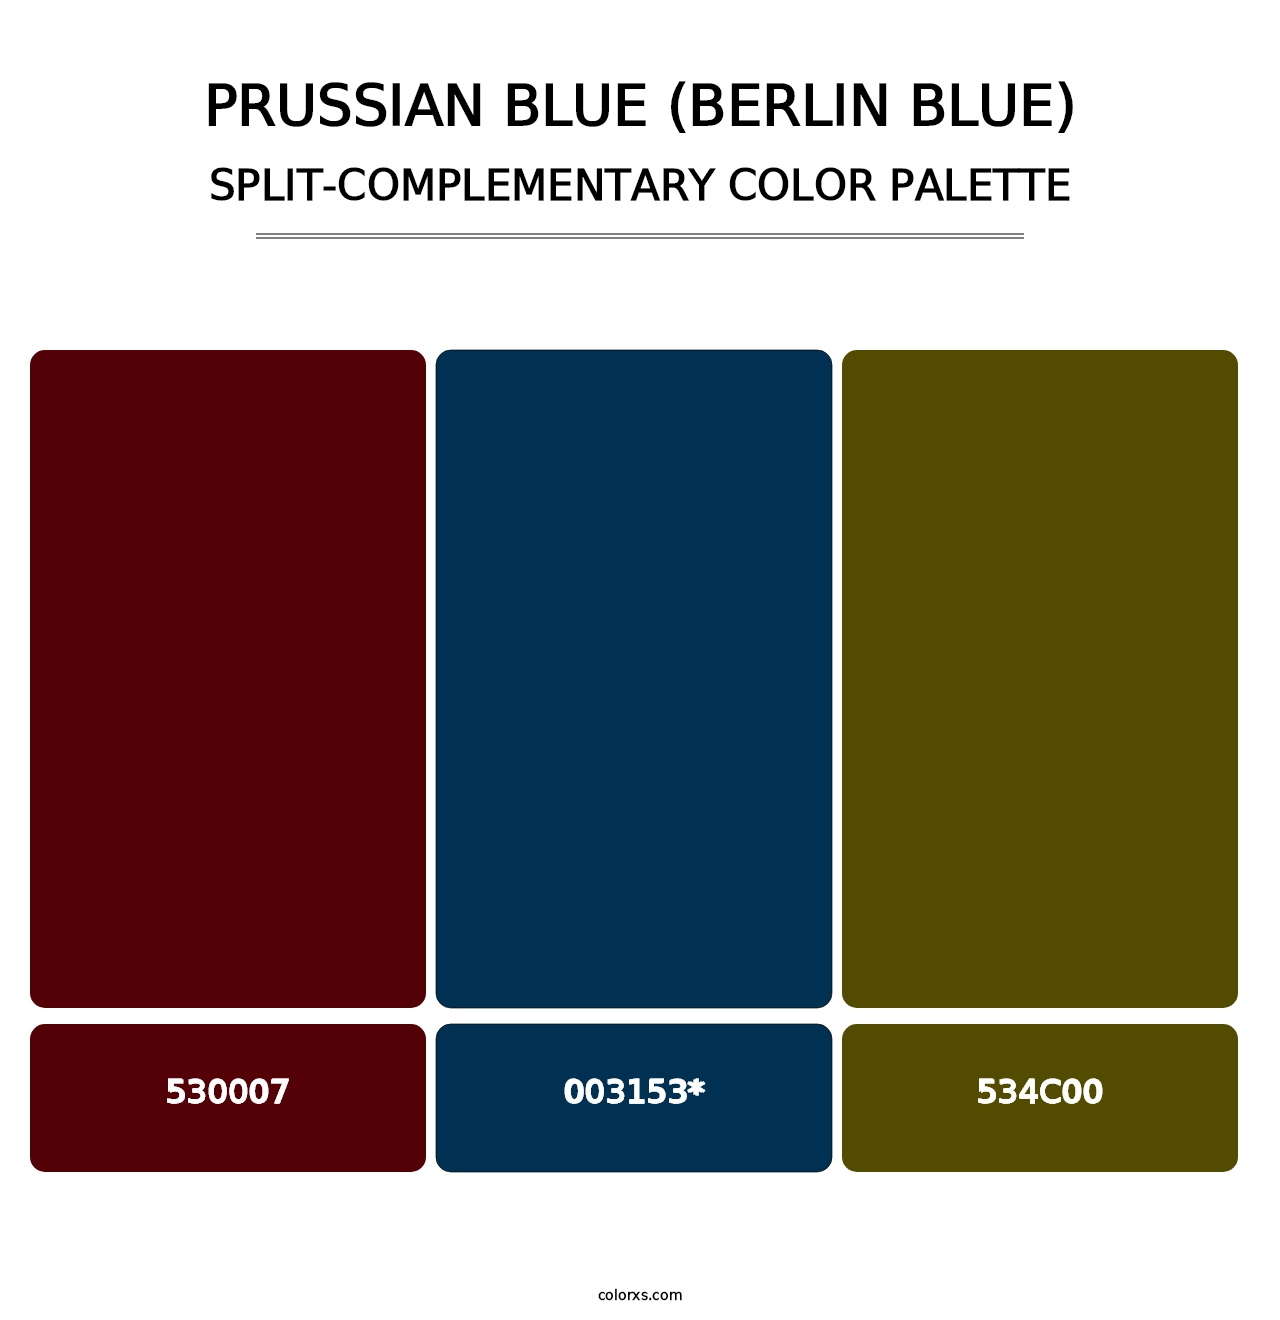 Prussian Blue (Berlin Blue) - Split-Complementary Color Palette